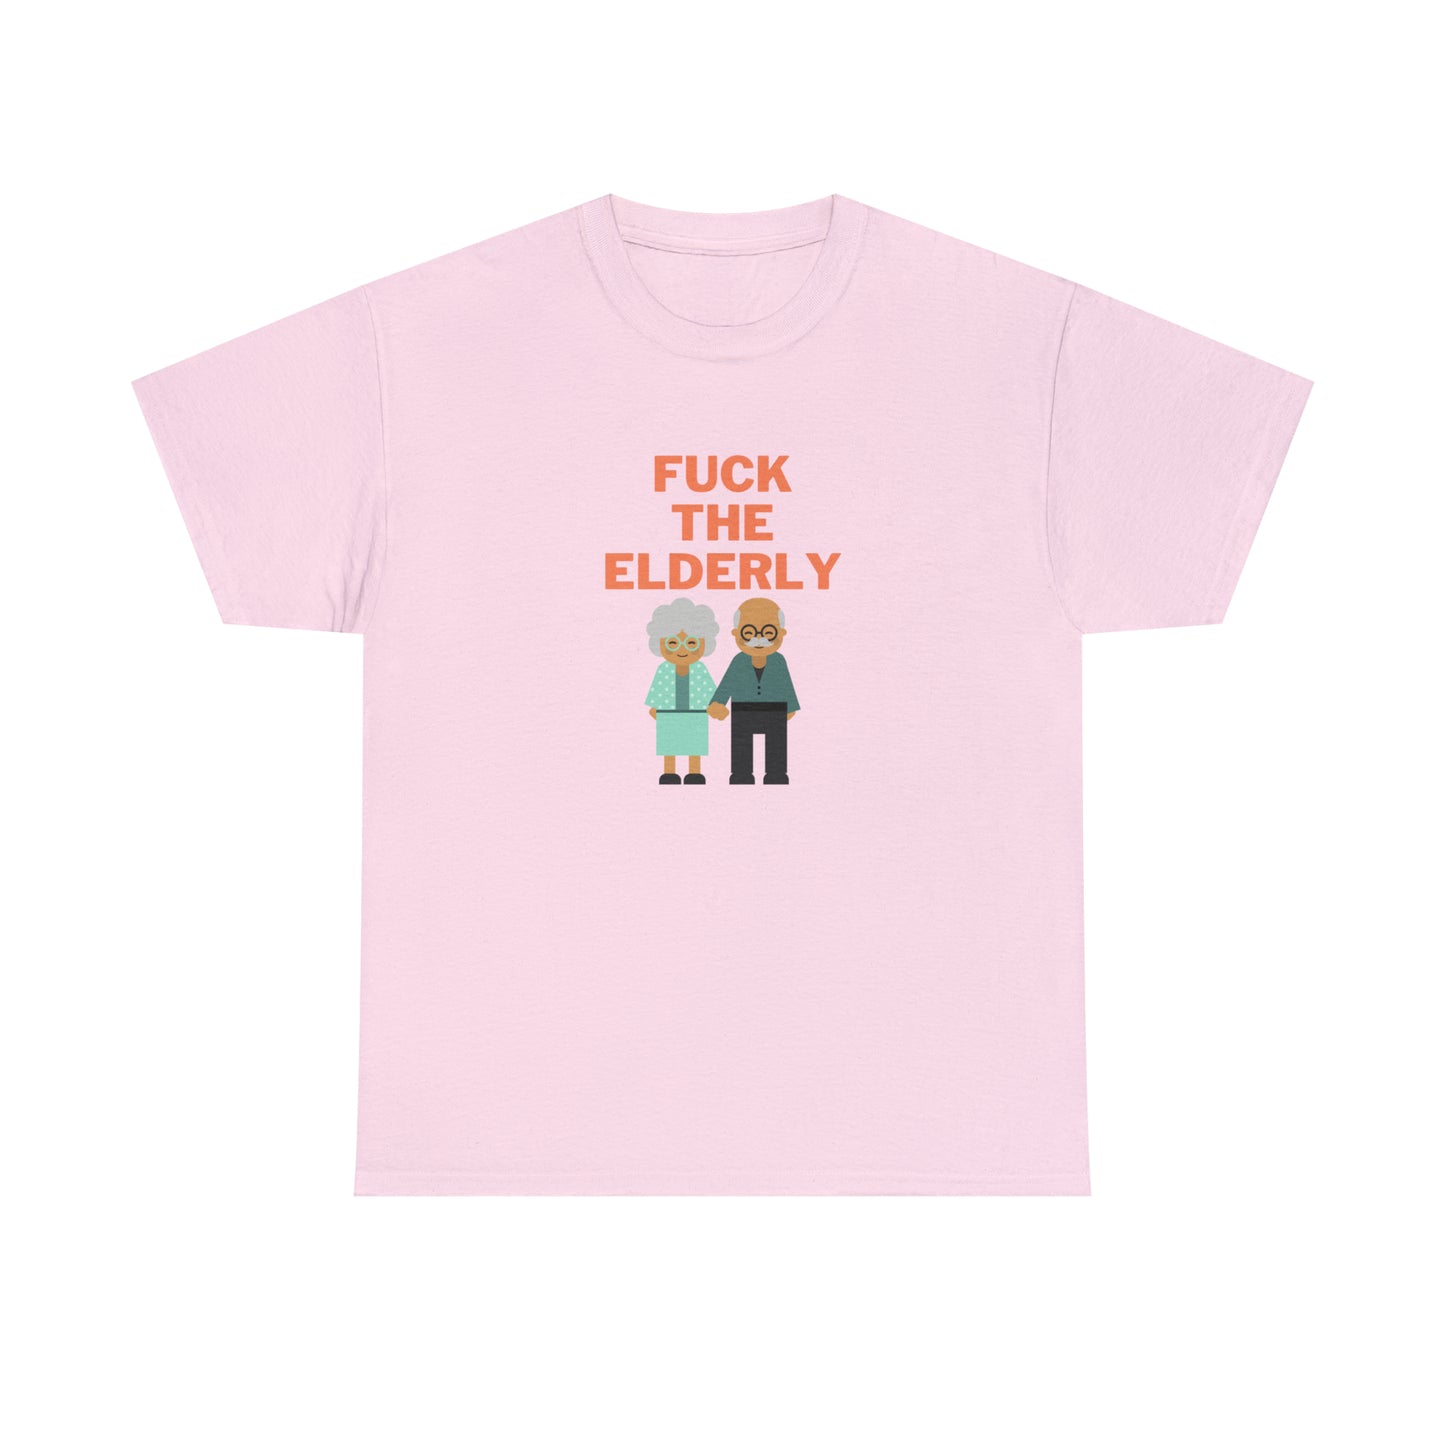 F**k the elderly T-Shirt